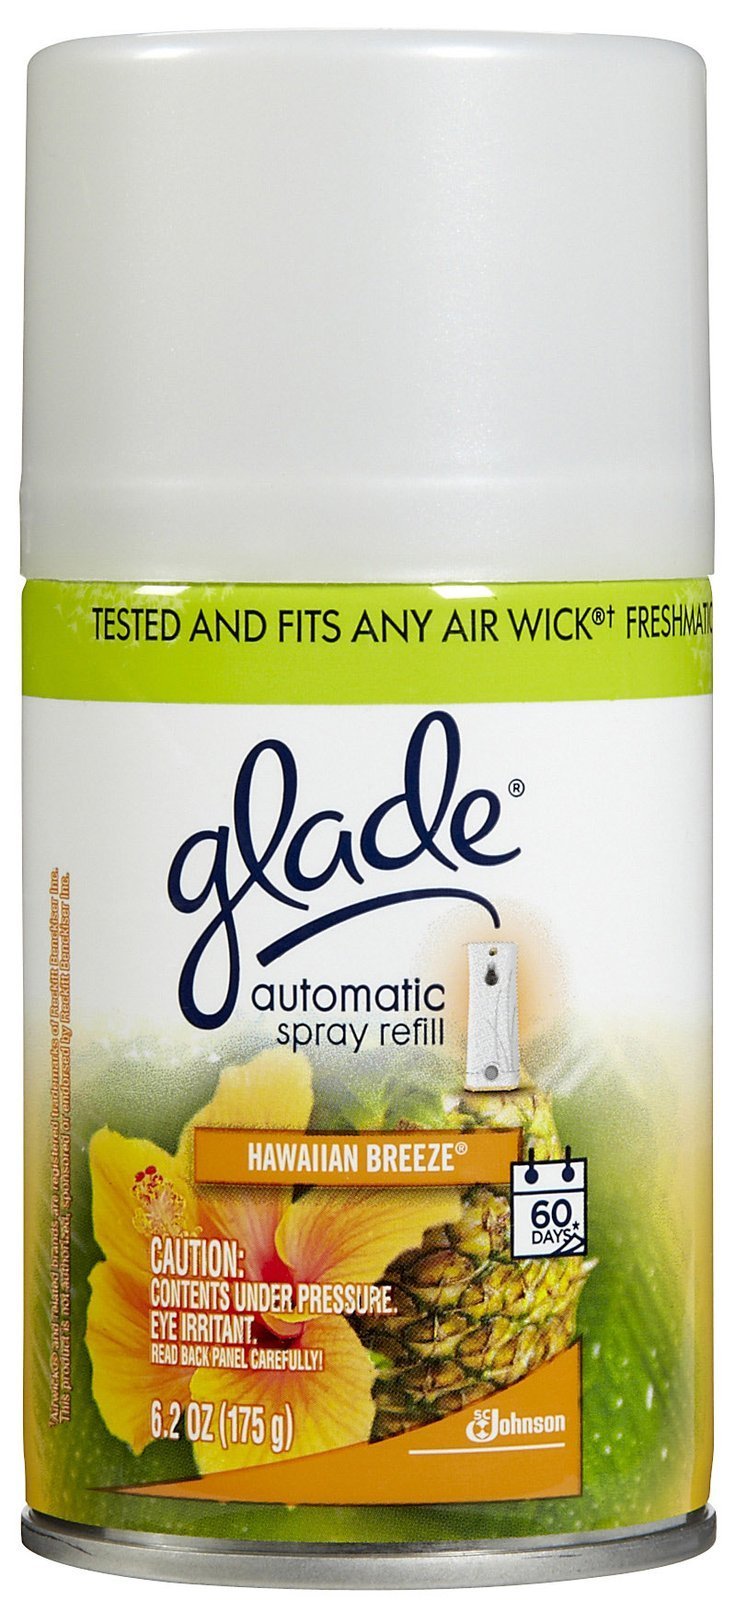 Glade Automatic Spray Refill - Hawaiian Breeze - 6.2 oz by Glade